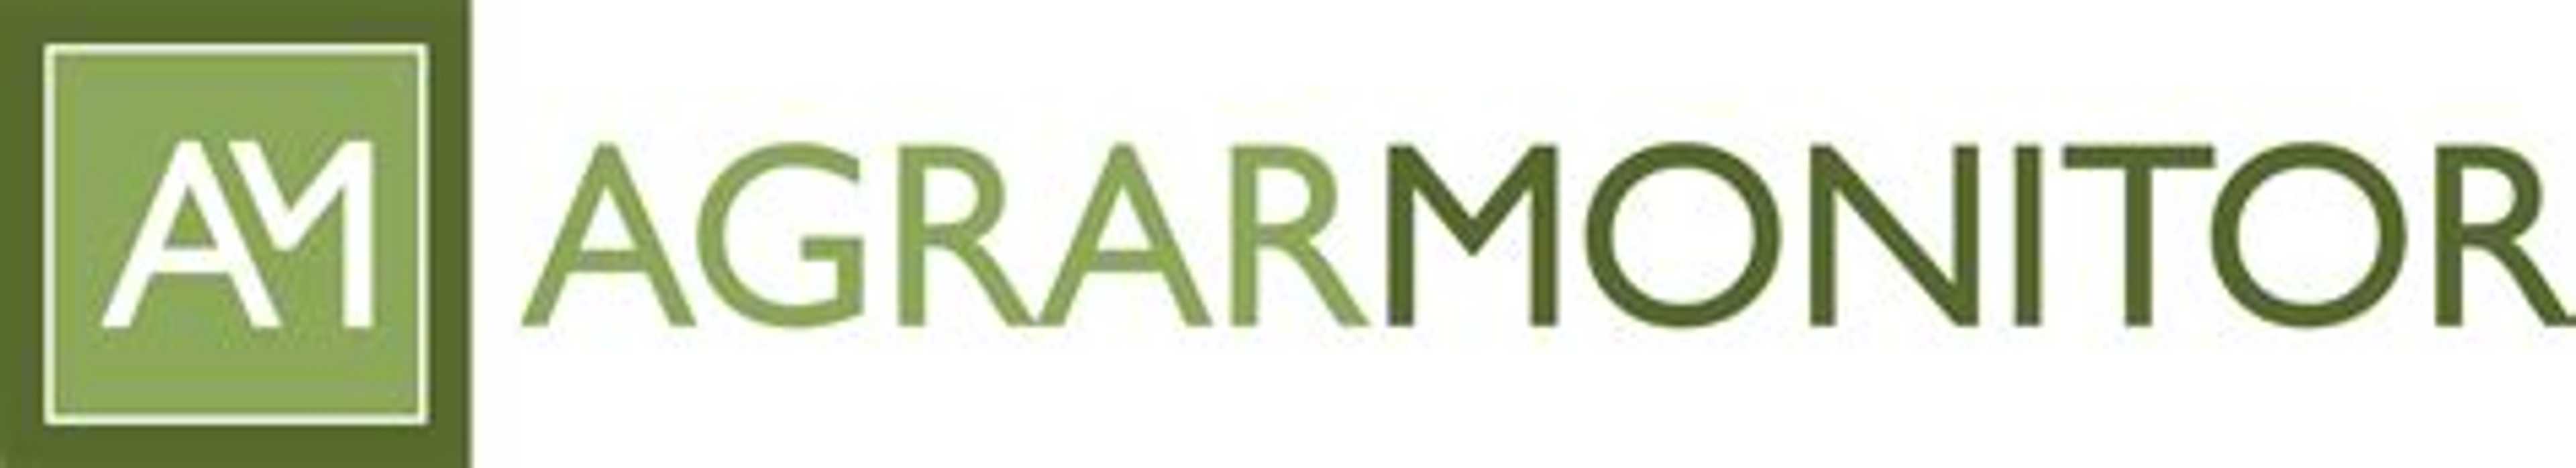 Agrarmonitor Logo